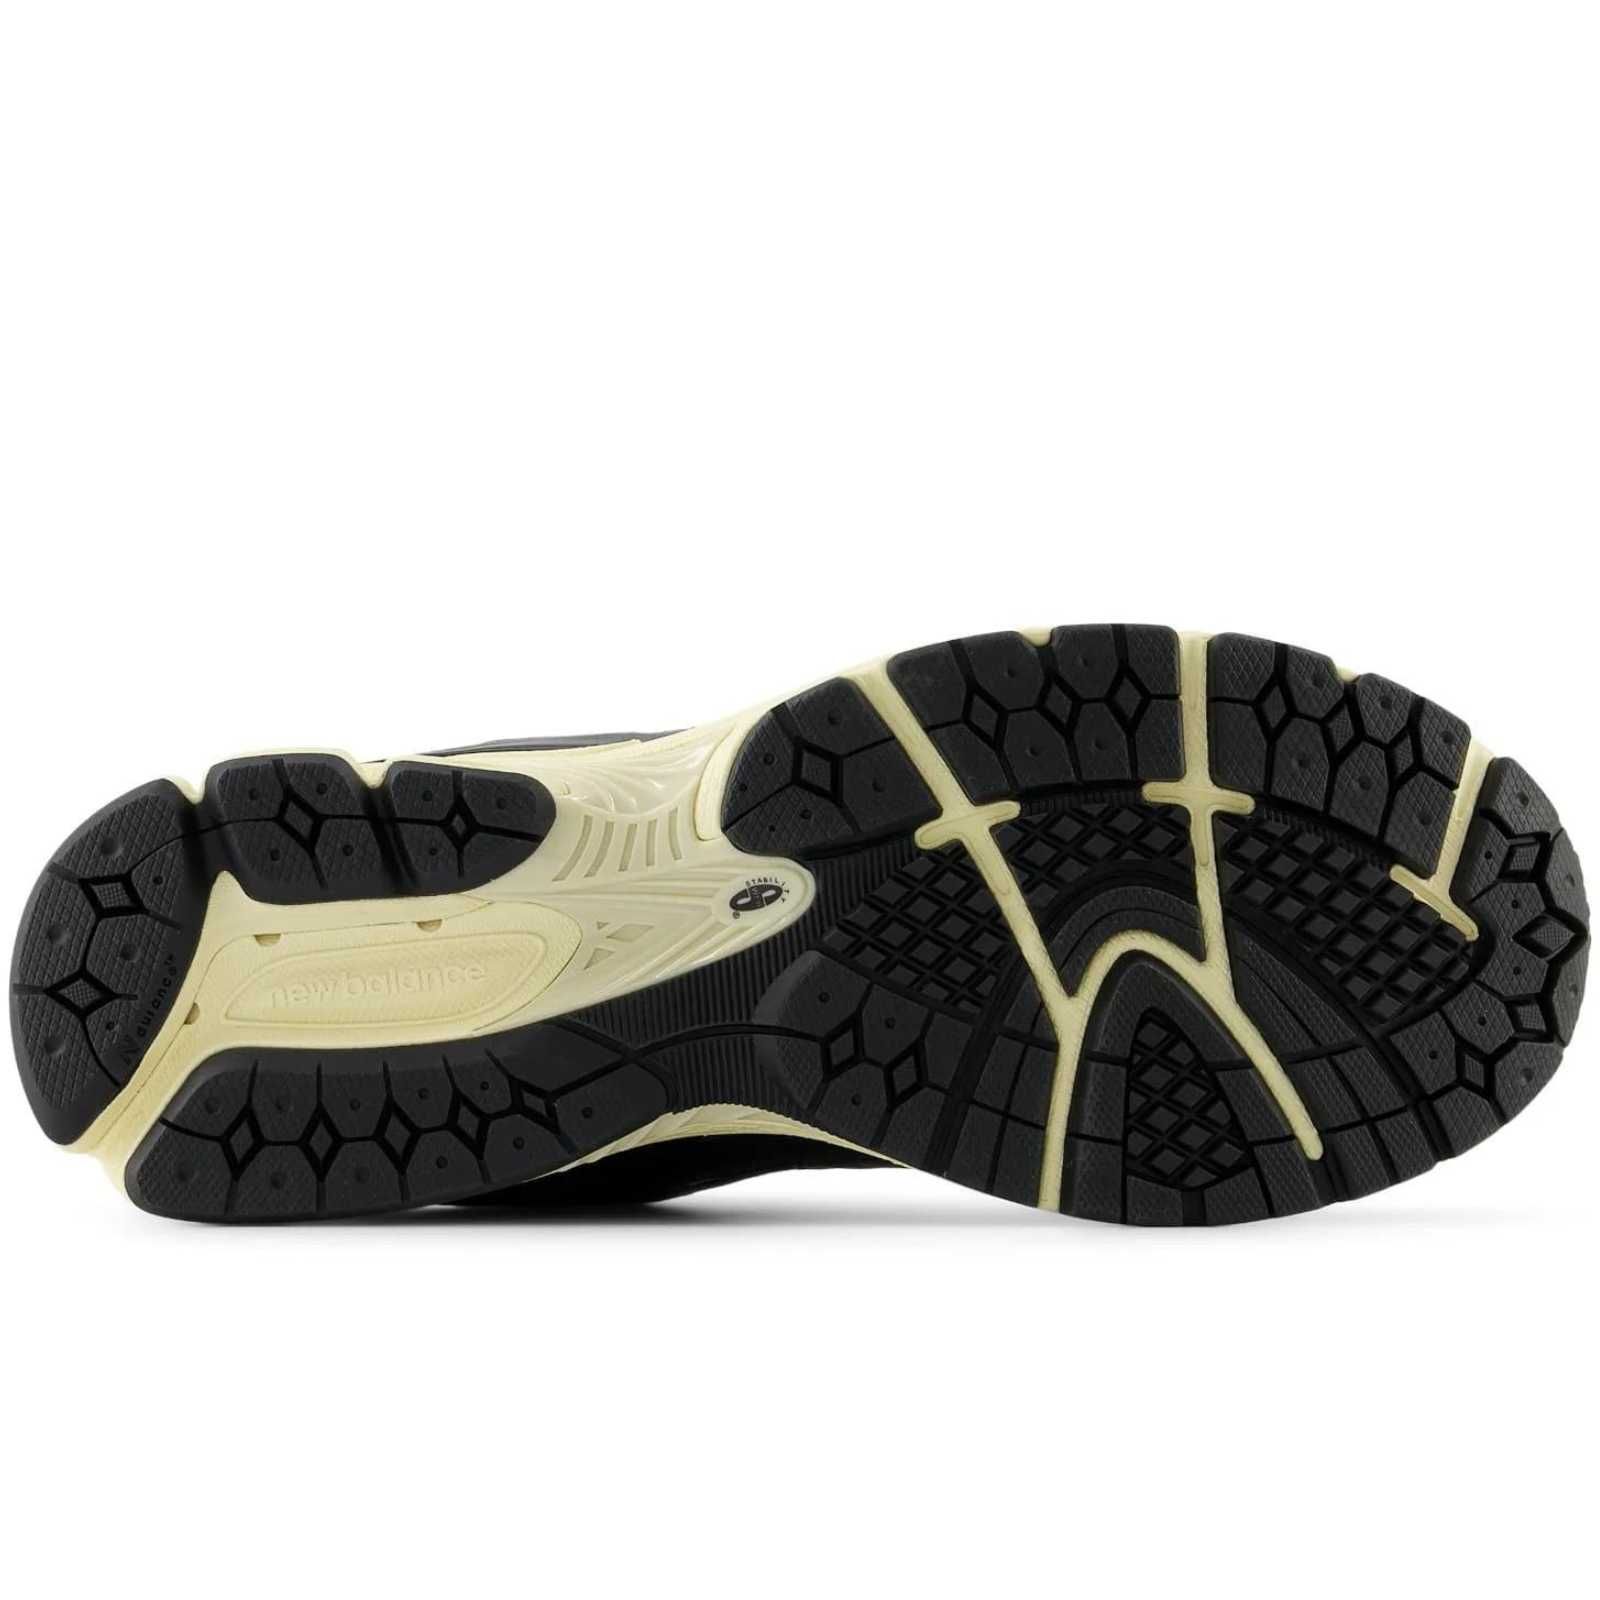 ОРИГИНАЛ‼️ New Balance 2002R (M2002RIB) кроссовки мужские кросівки